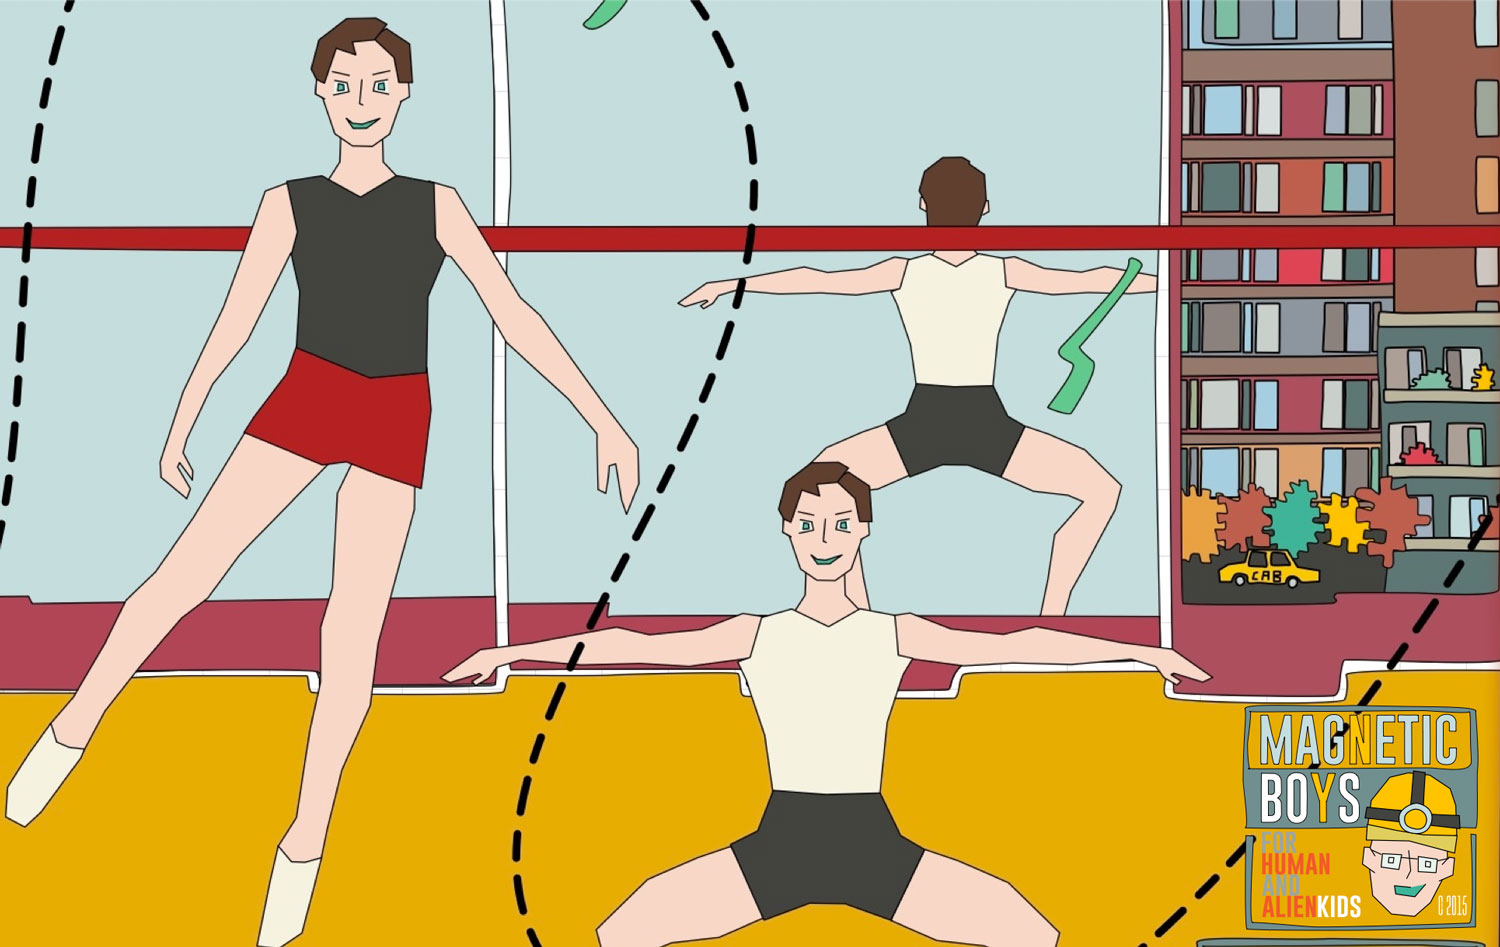 School Ballet Training - Magneticboys